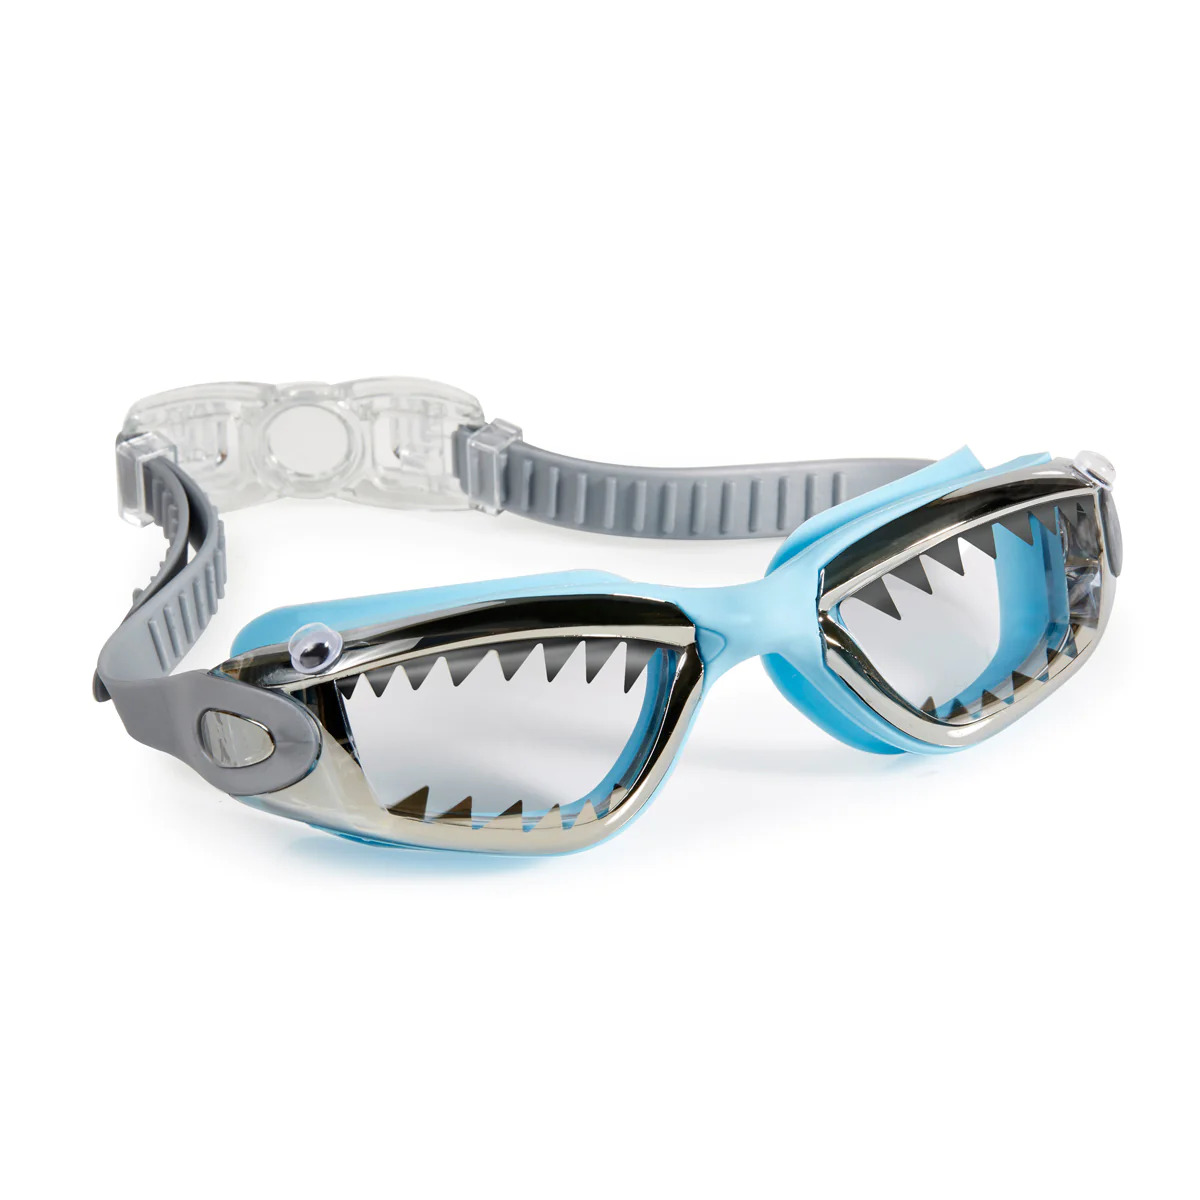 Bling2o Goggles | Baby Blue Tip Shark